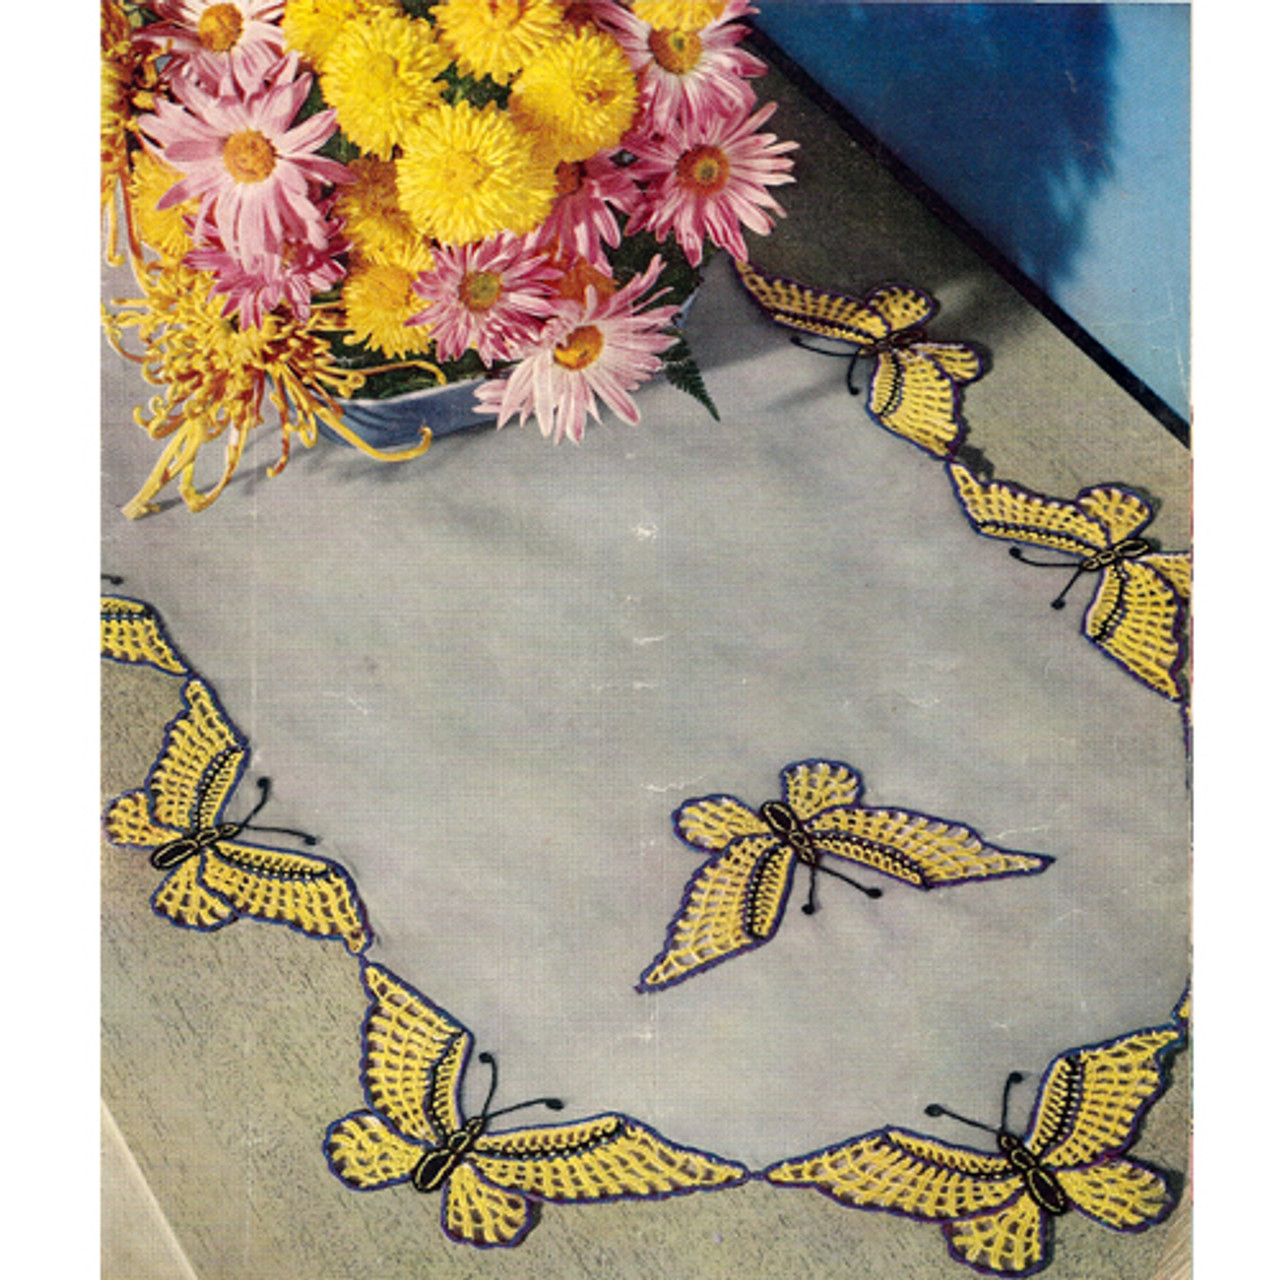 Crochet Butterfly Runner Pattern from Coats & Clarks